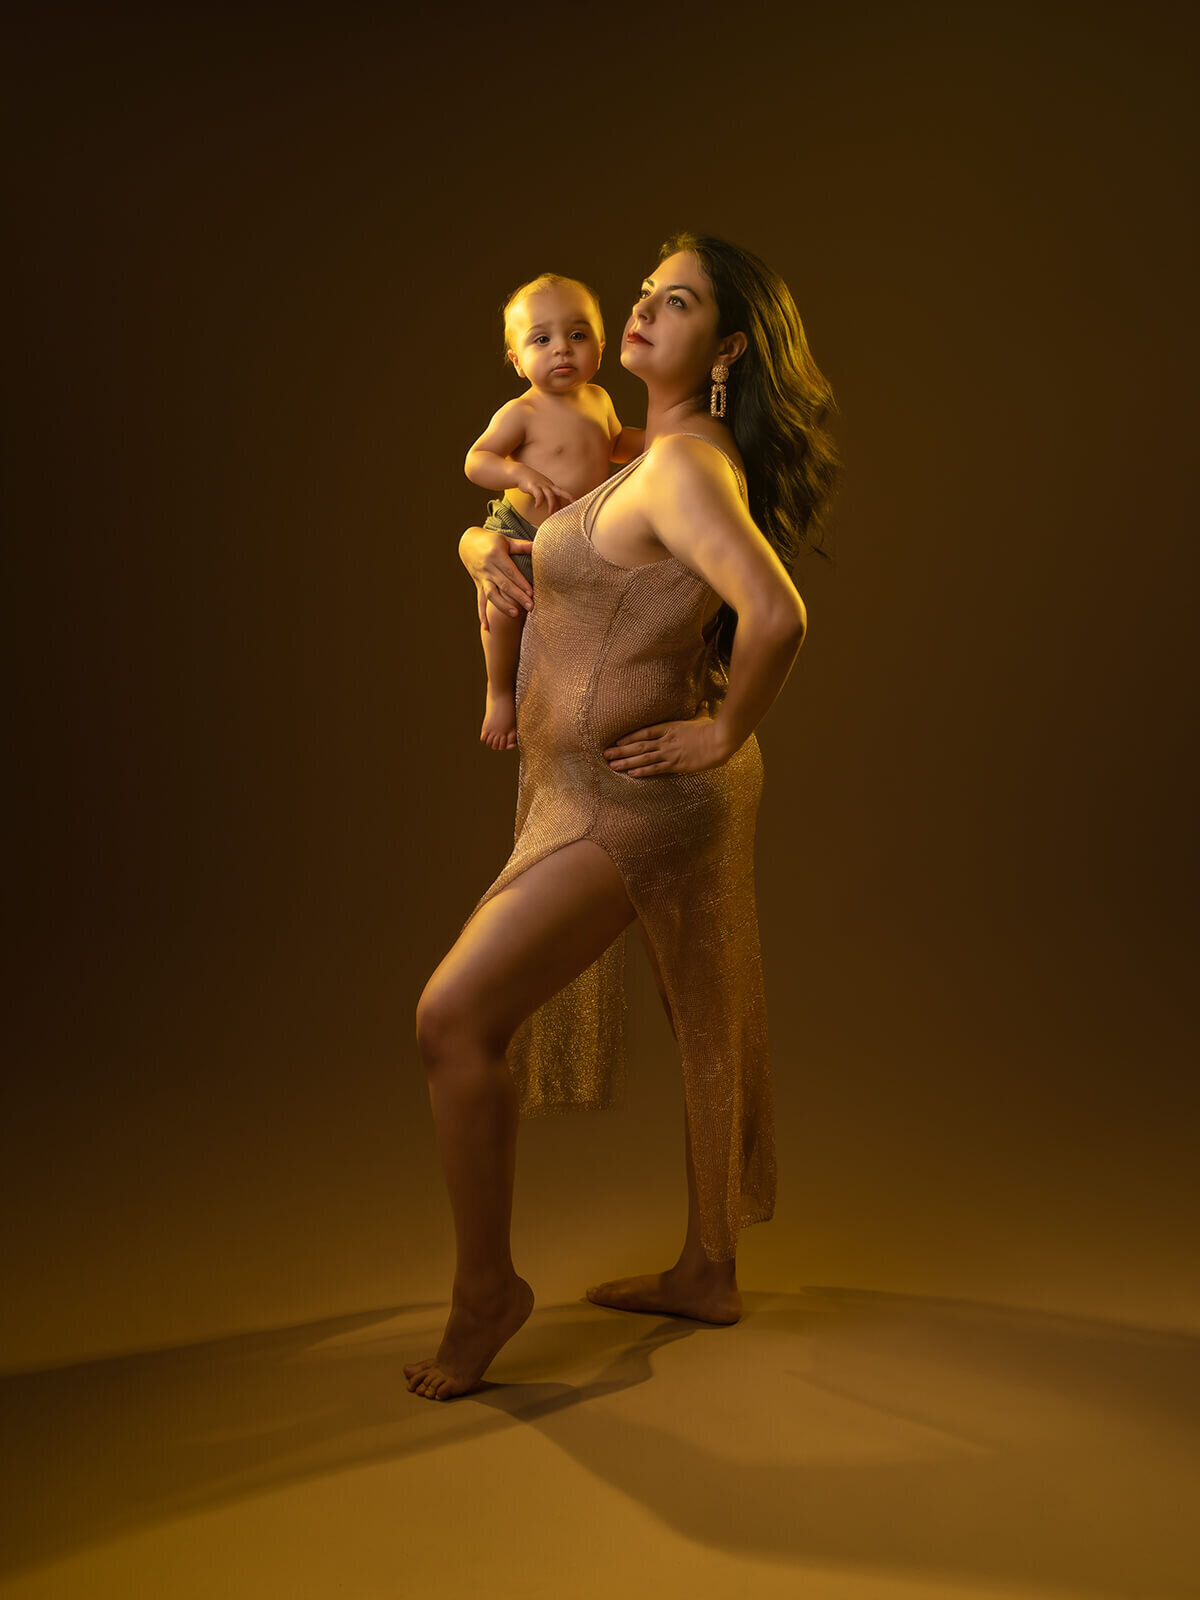 motherhood photo using yellow light